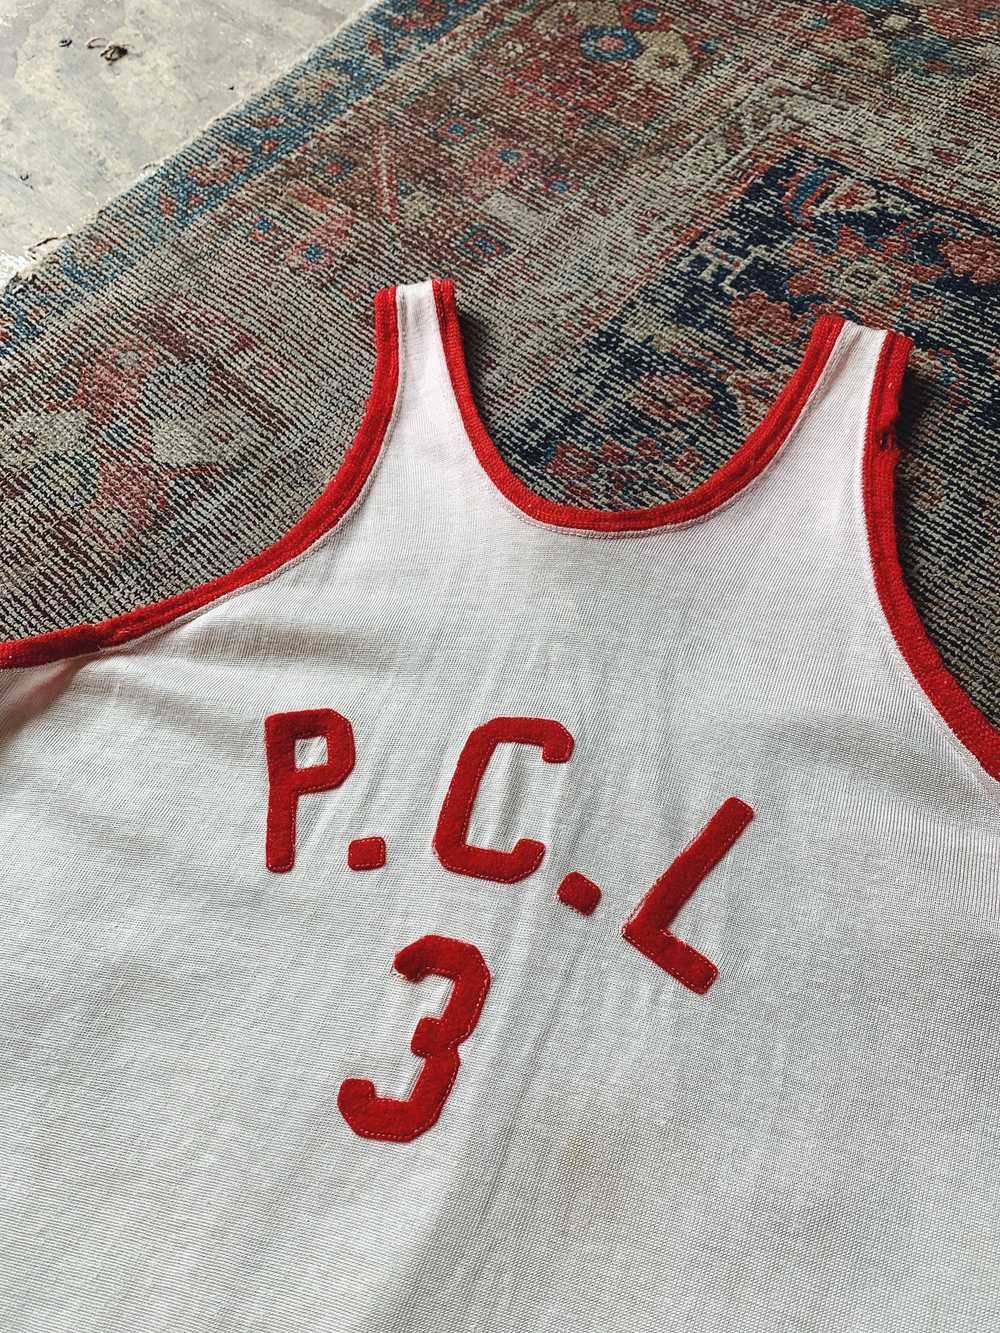 Vintage “P.C.L.” Basketball Jersey - image 2